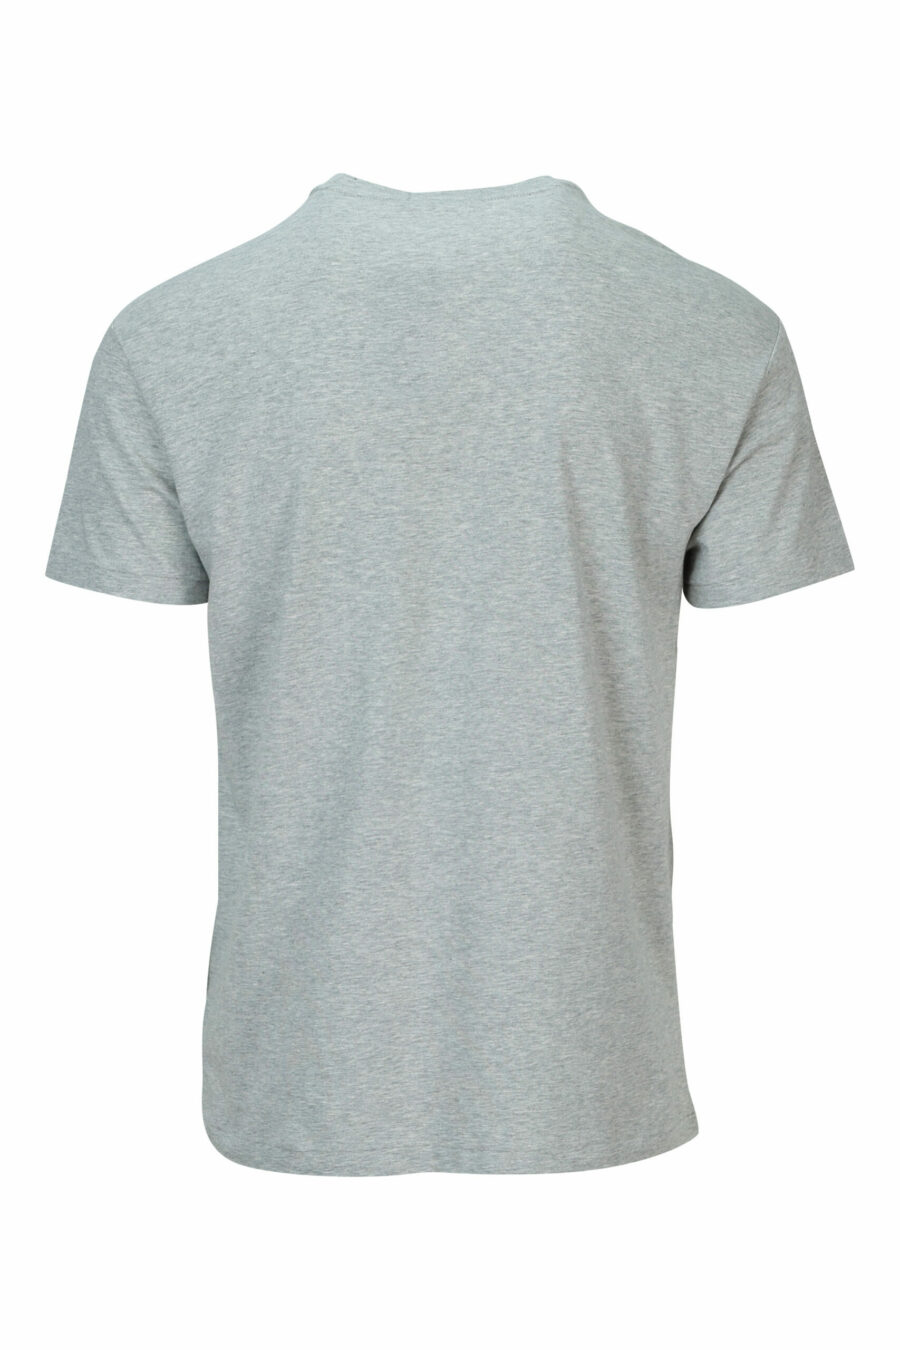 Camiseta gris con maxilogo "polo bear" traje - 3616536211918 1 scaled